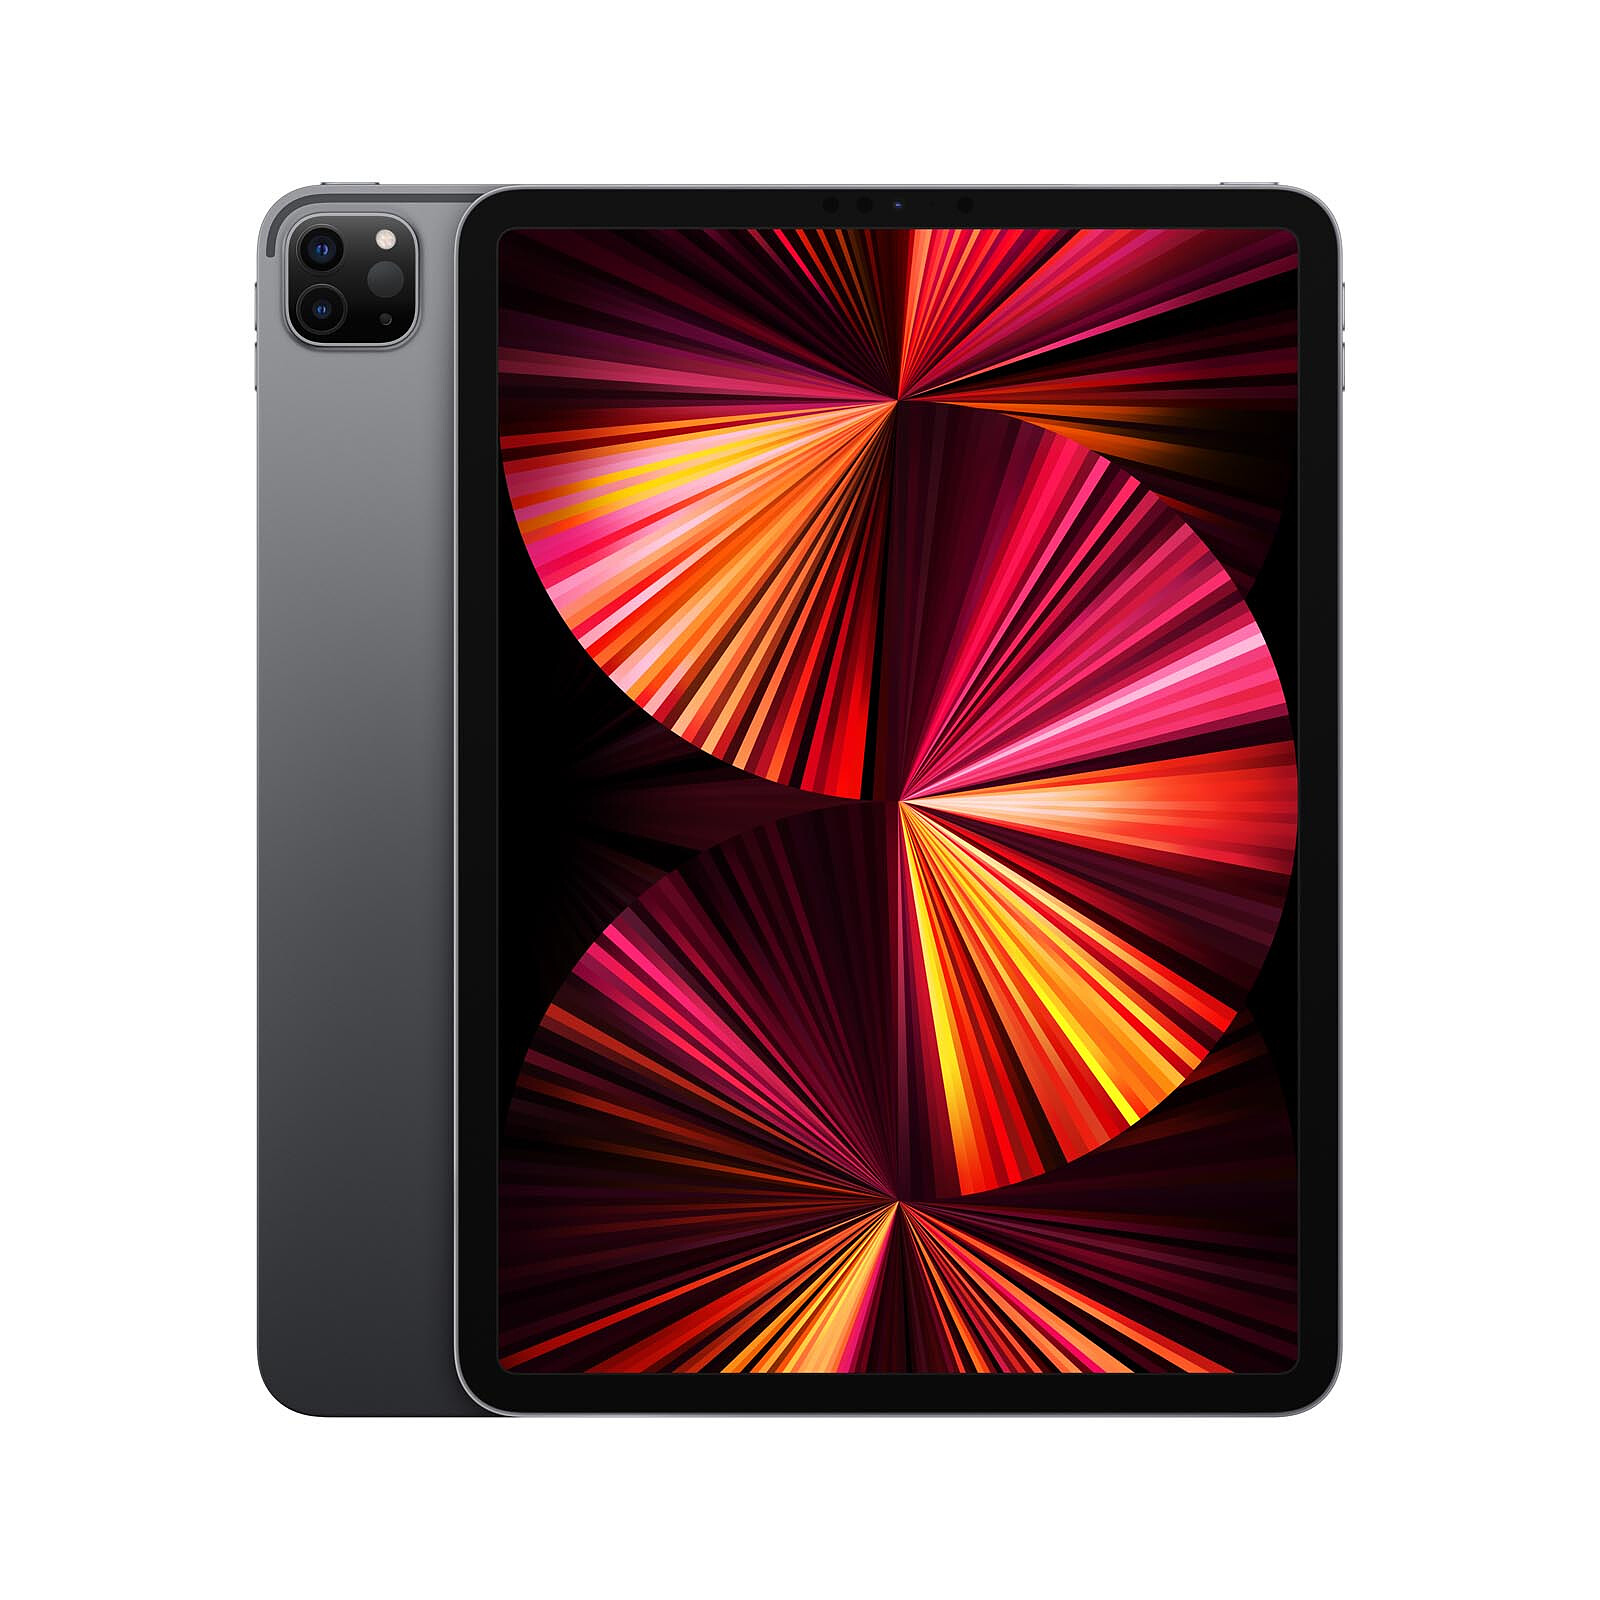 Apple iPad Pro (2021) 11-inch 512GB Wi-Fi Space Grey - Tablet computer -  LDLC 3-year warranty